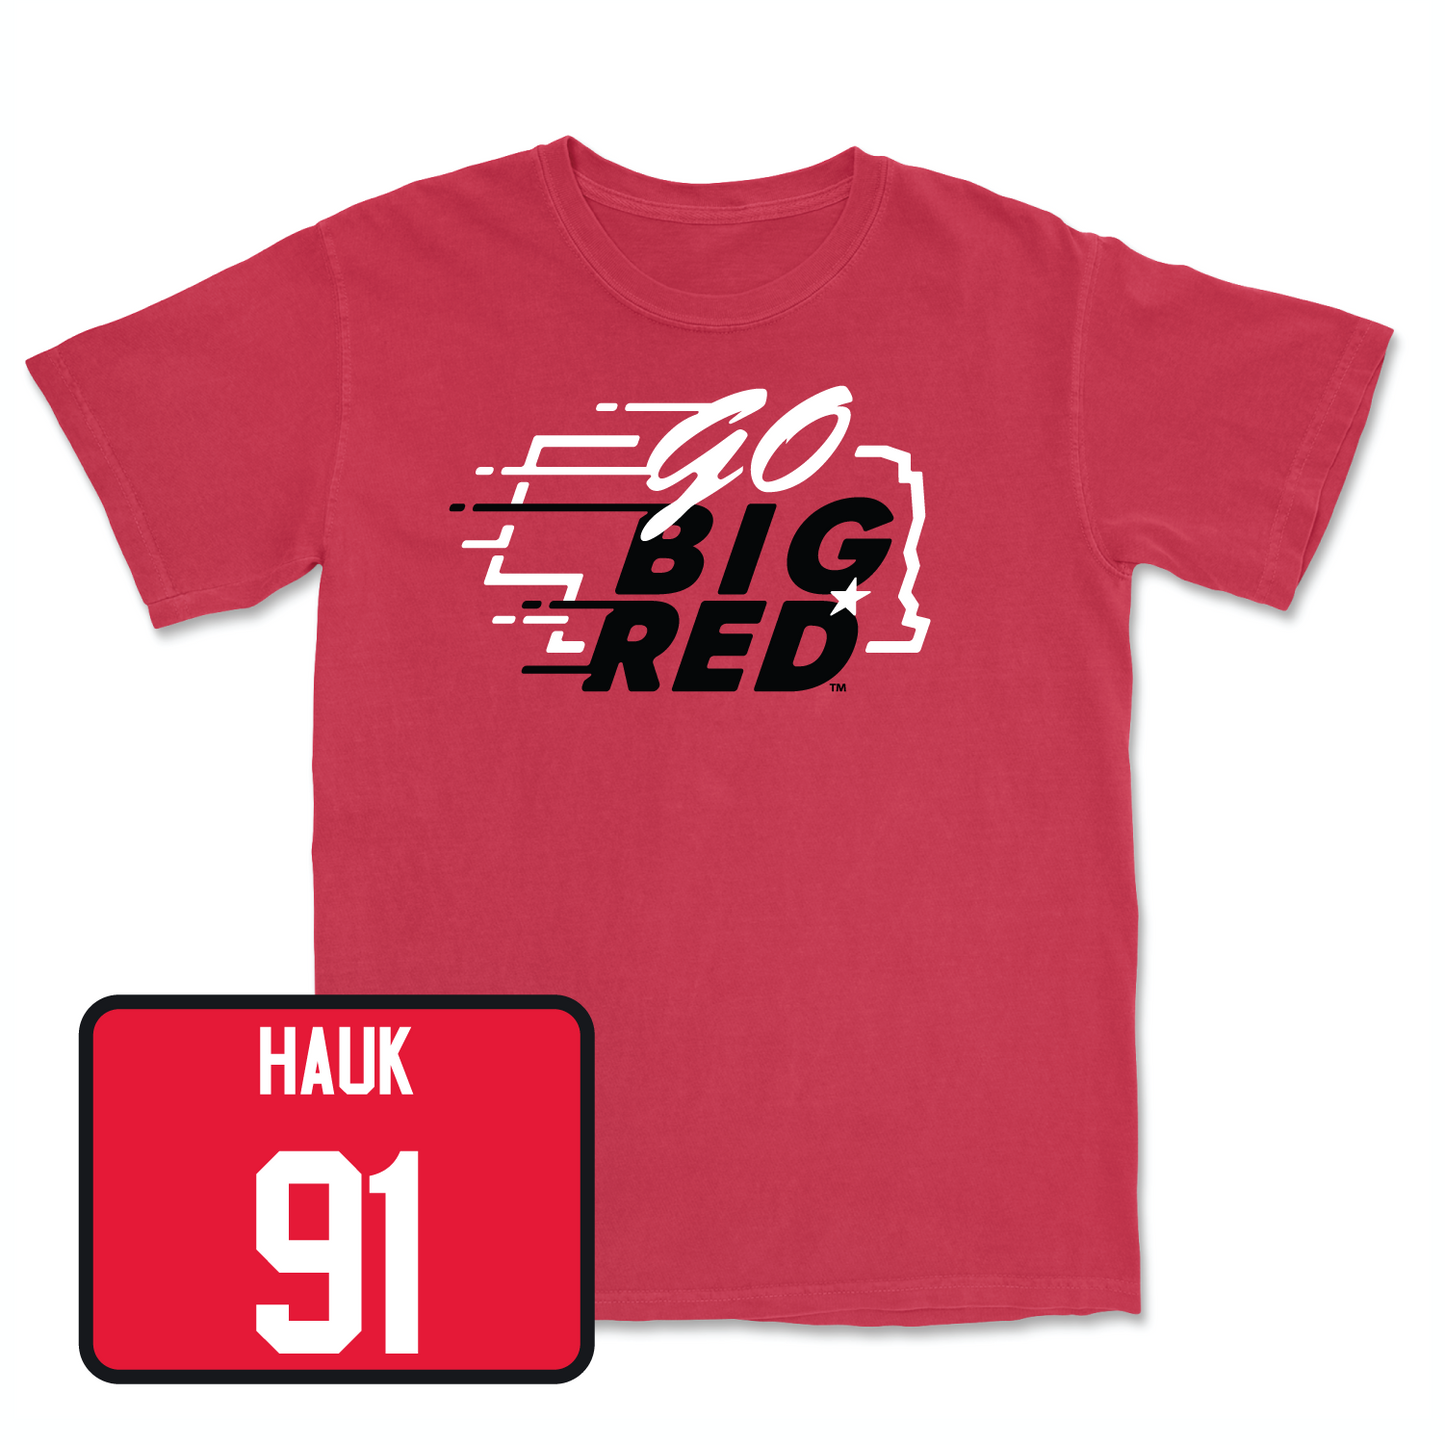 Red Women's Soccer GBR Tee X-Large / Sami Hauk | #91